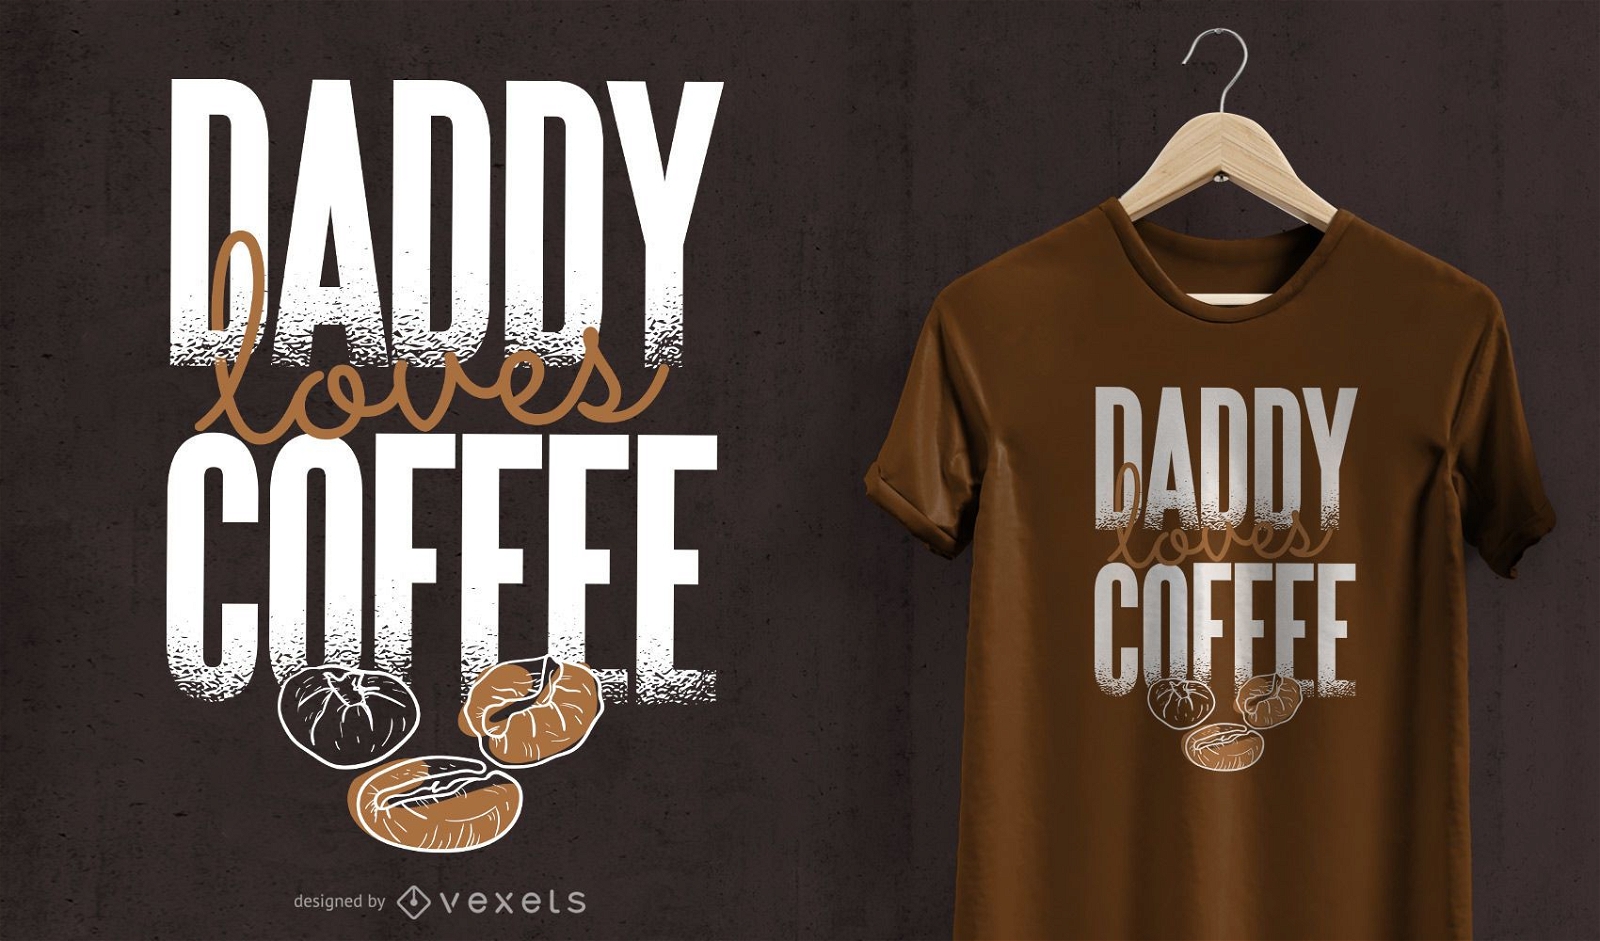 Daddy loves coffee t-shirt design